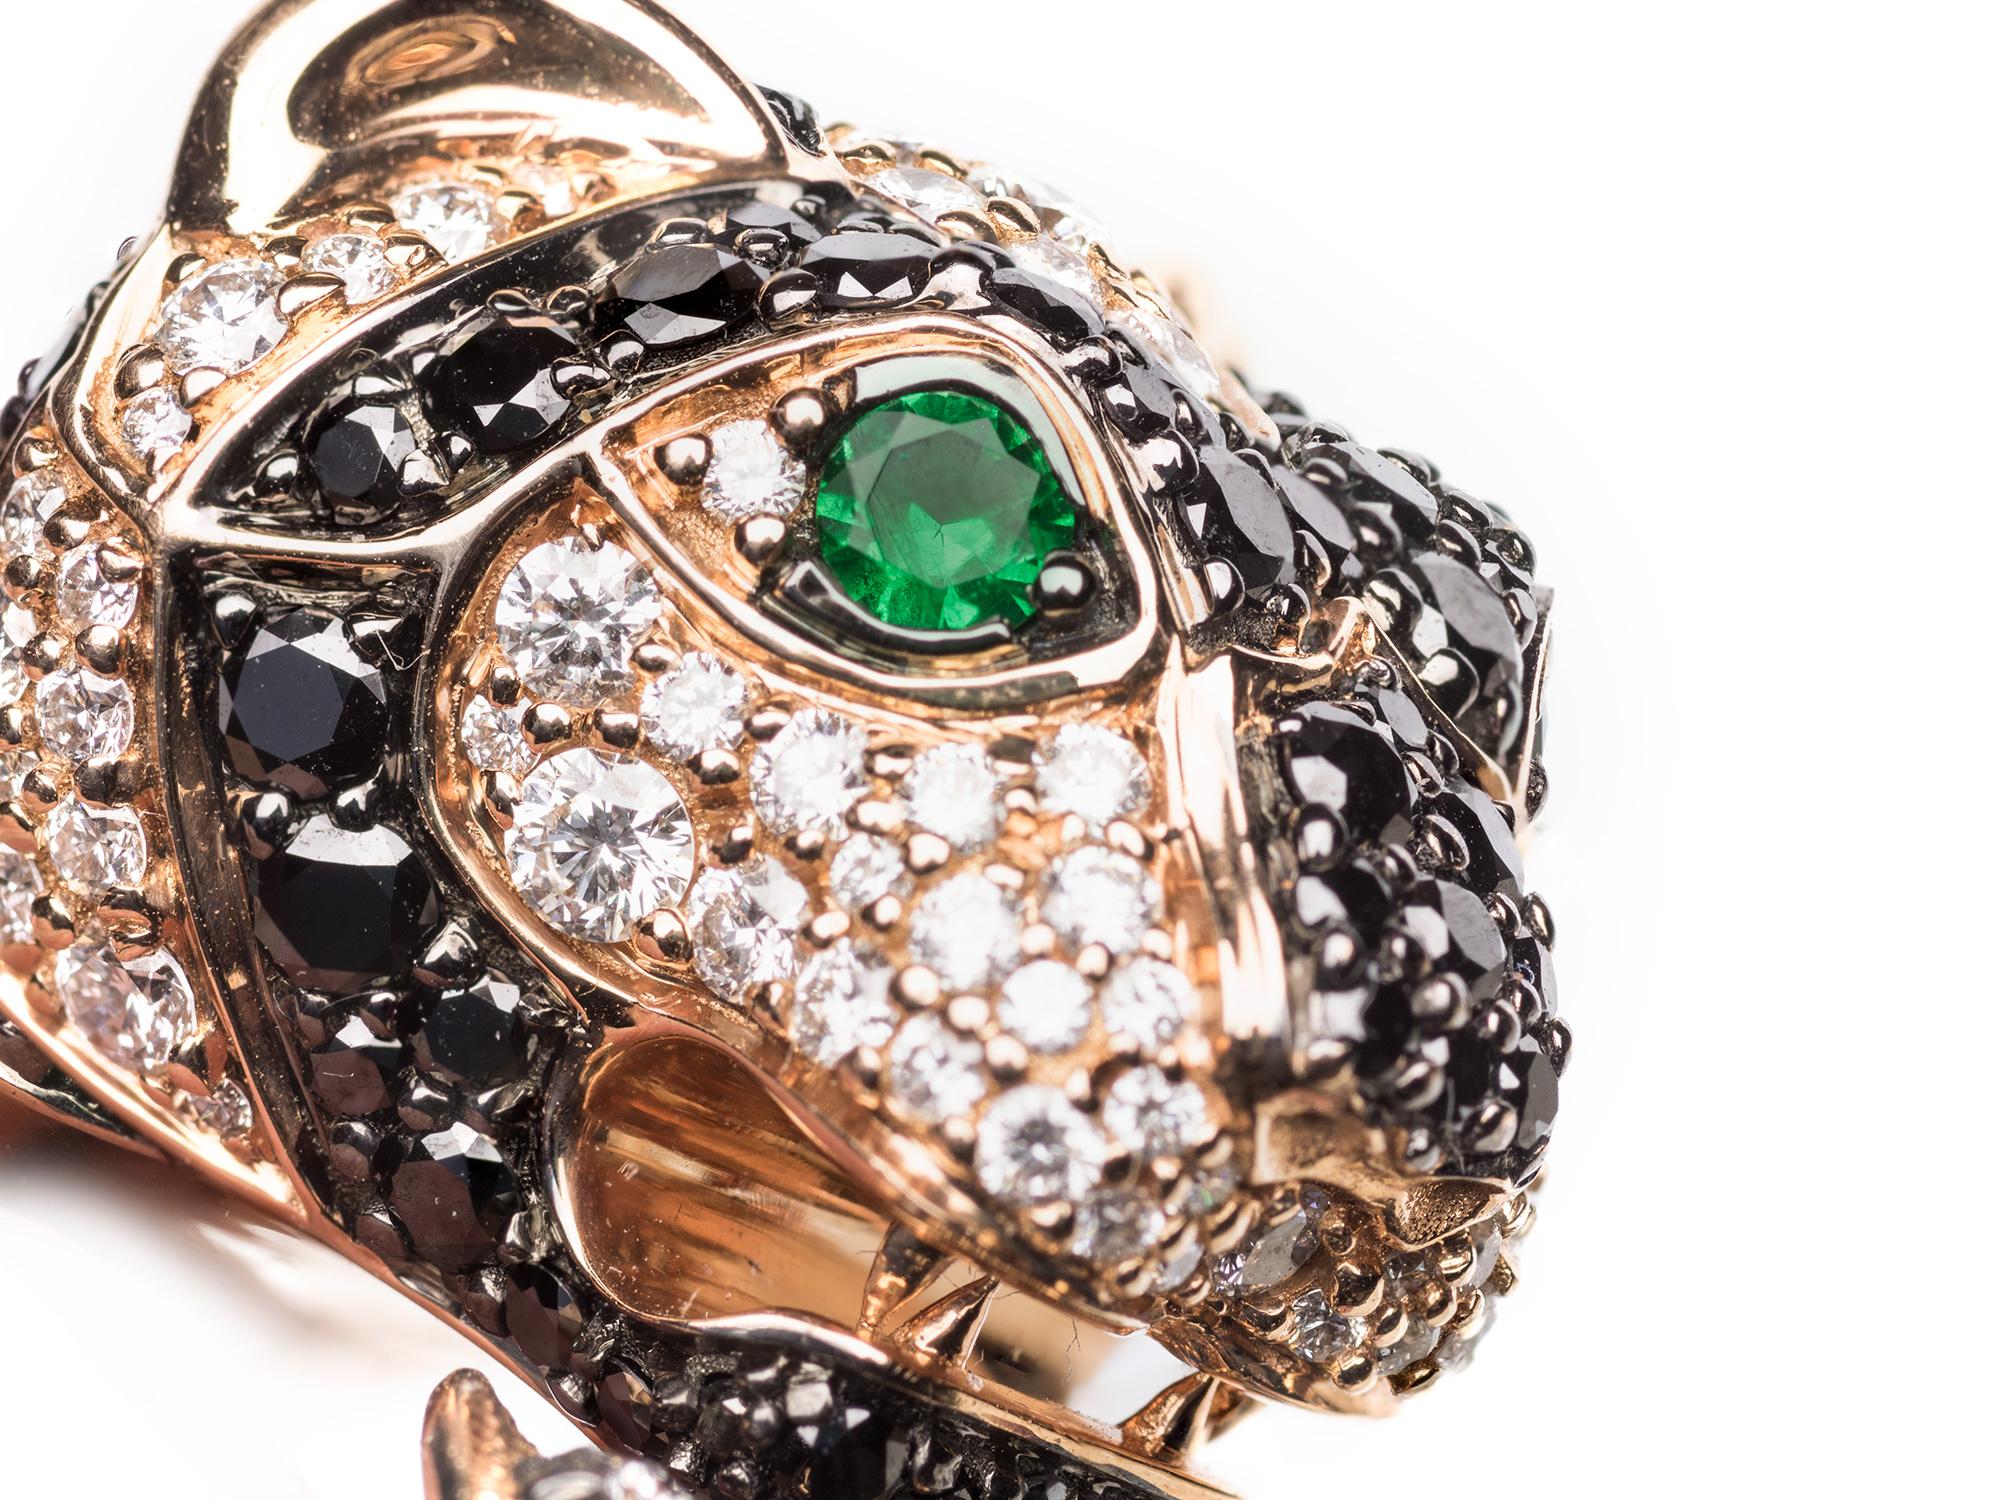 Gucci Le Marche des Merveilles Yellow Gold Tiger Head Ring - Size 7.5  YBC50315100116 - Jewelry - Jomashop